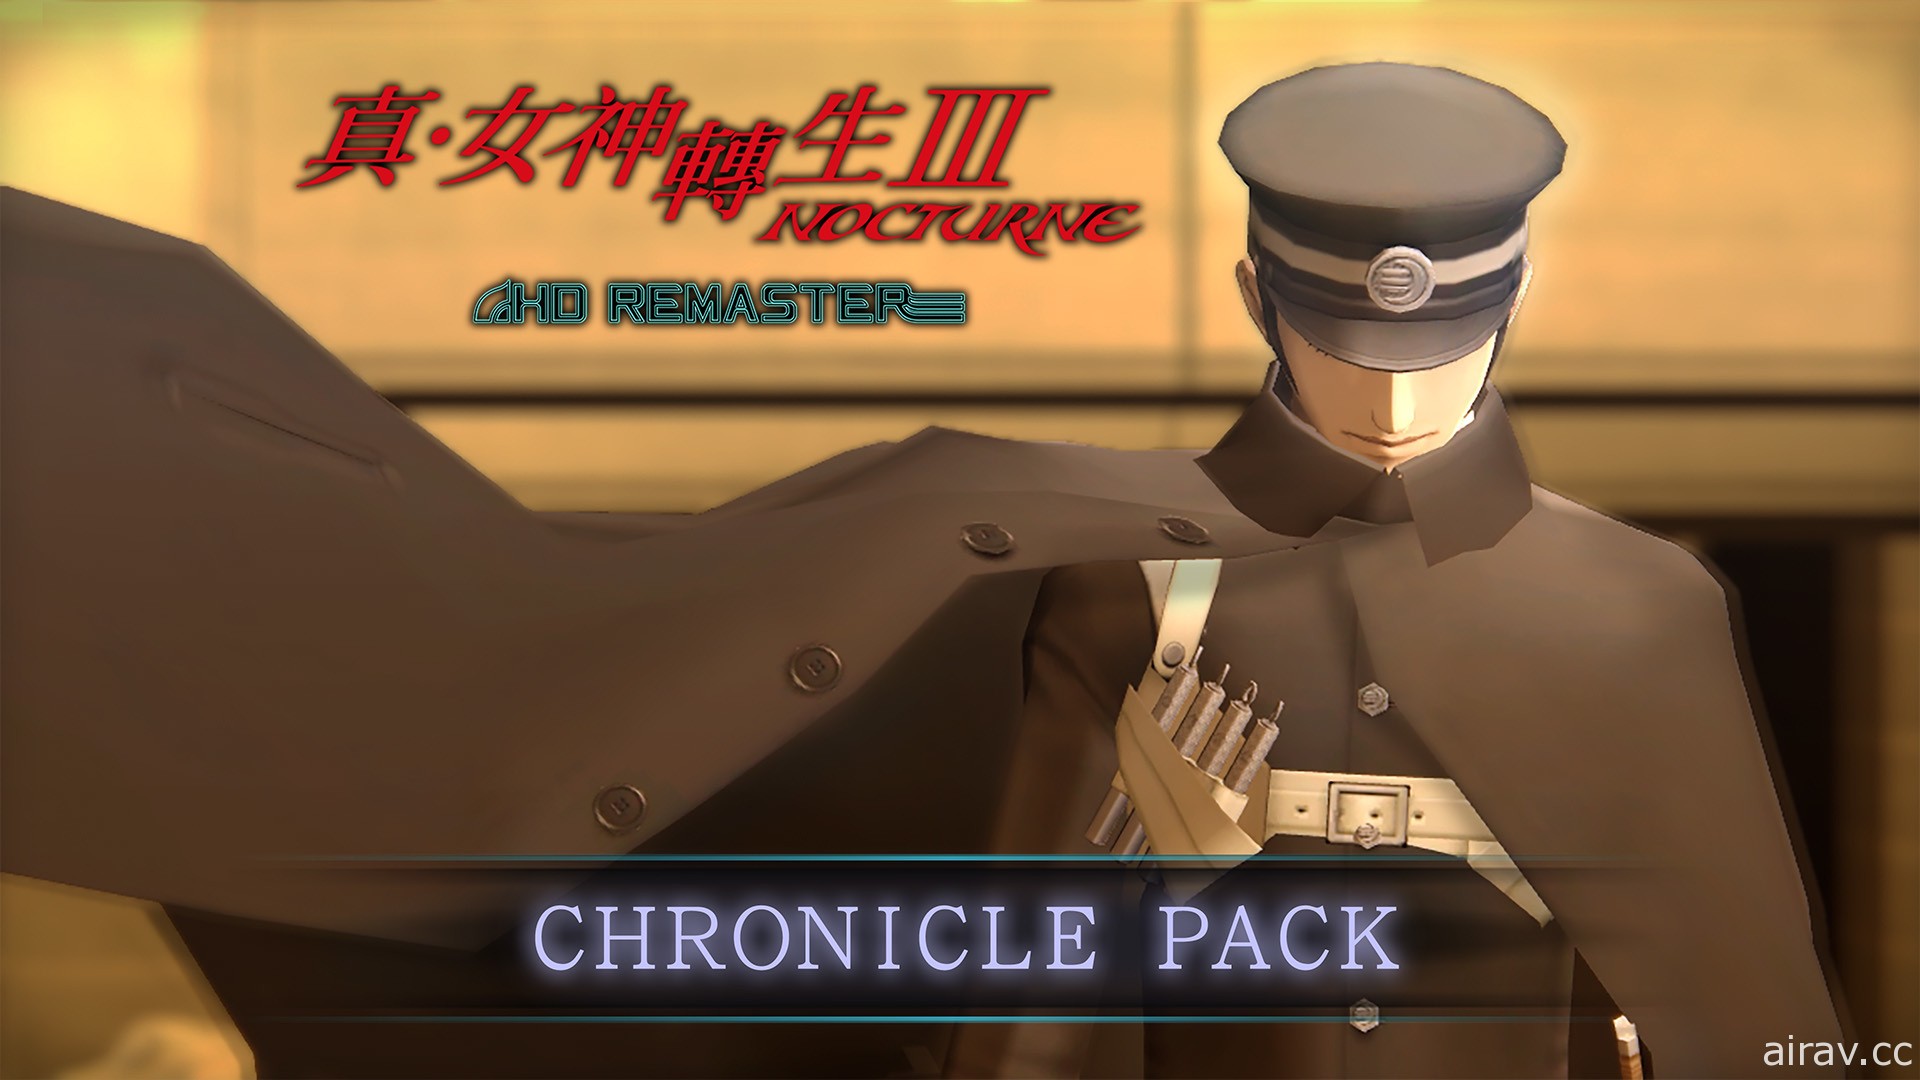 《真‧女神转生 III Nocturne HD Remaster》追加 DLC“Chronicle Pack”释出